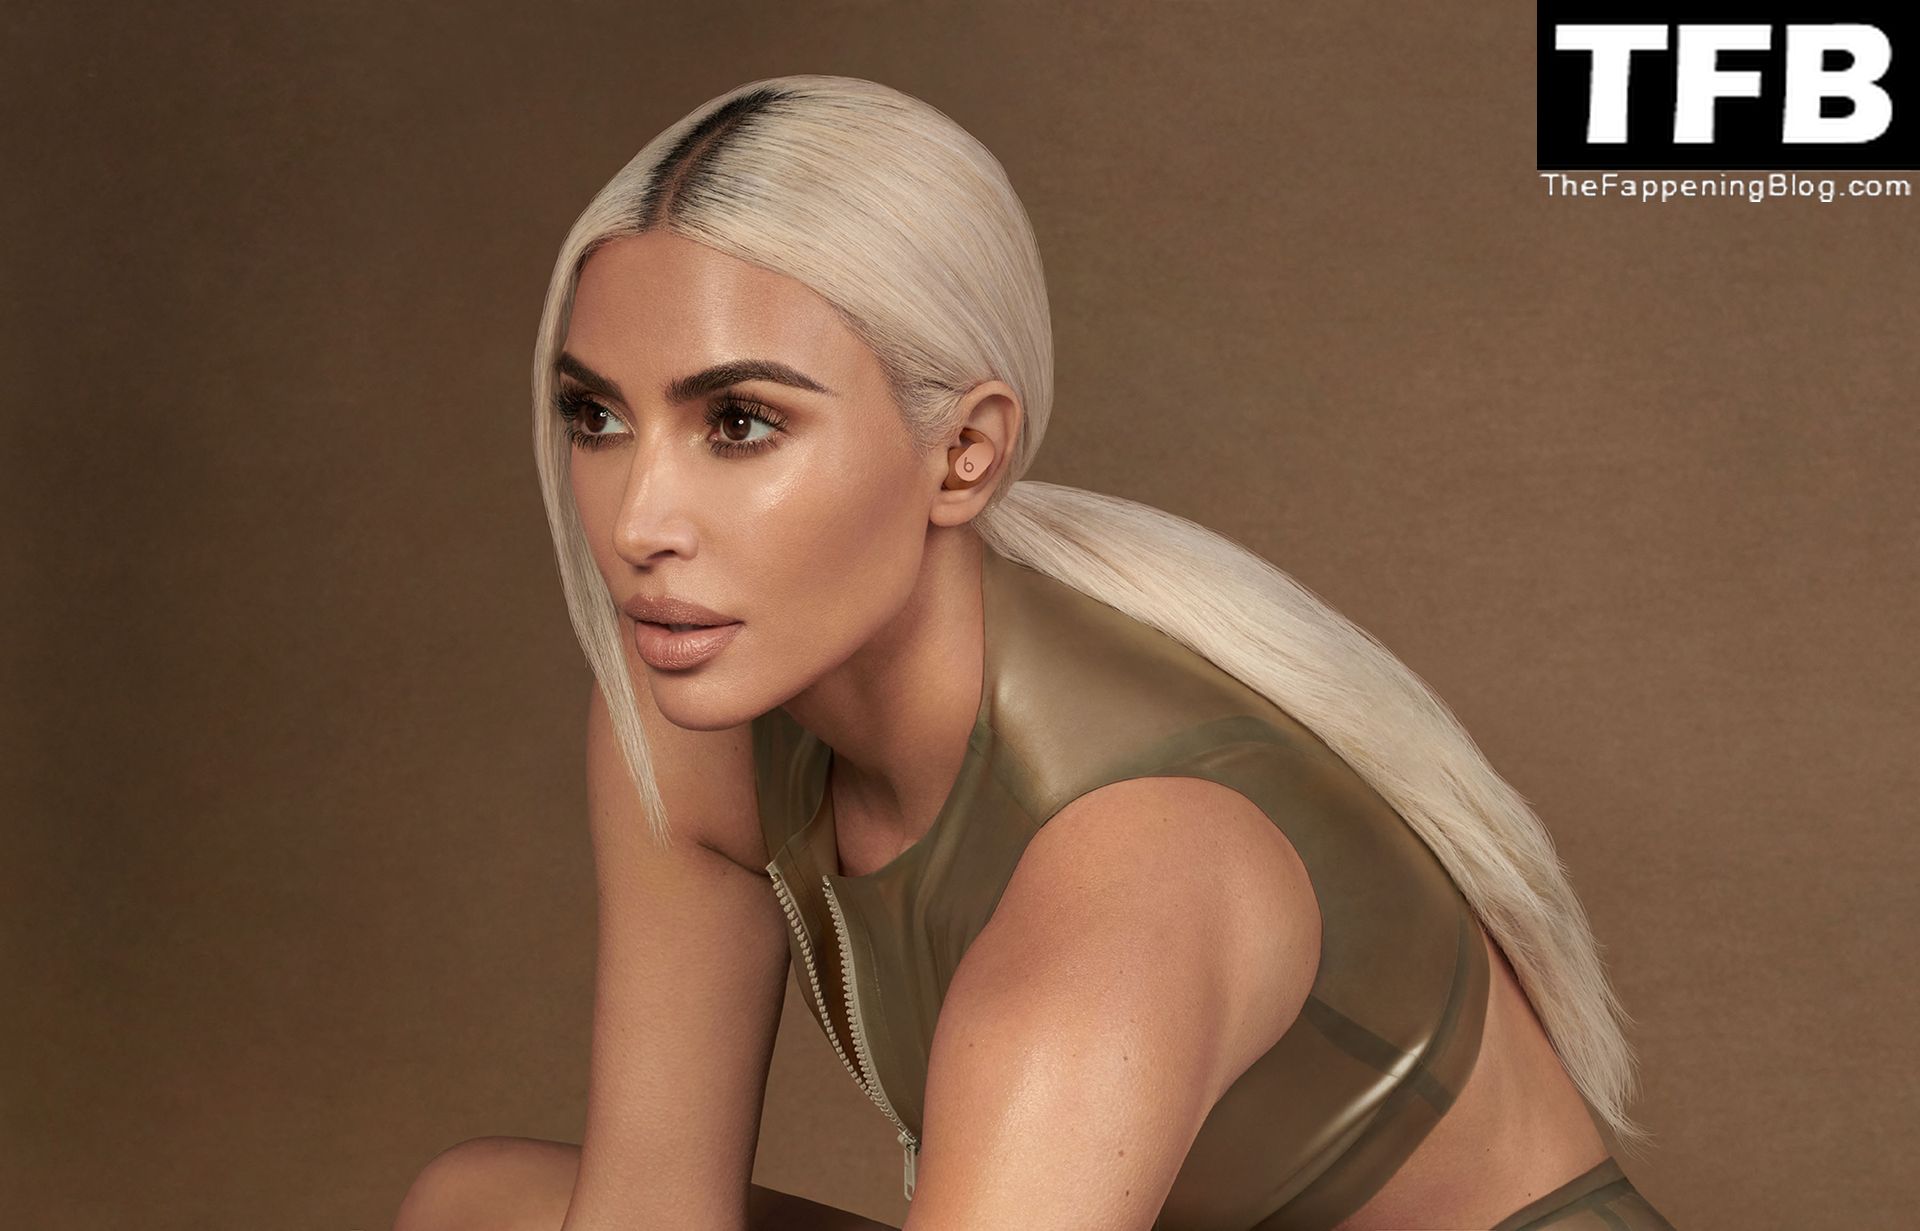 Kim Kardashian Sexy The Fappening Blog 1 - Kim Kardashian Promotes “Beats x Kim” Wireless Airbuds in a Sexy Shoot (9 Photos)